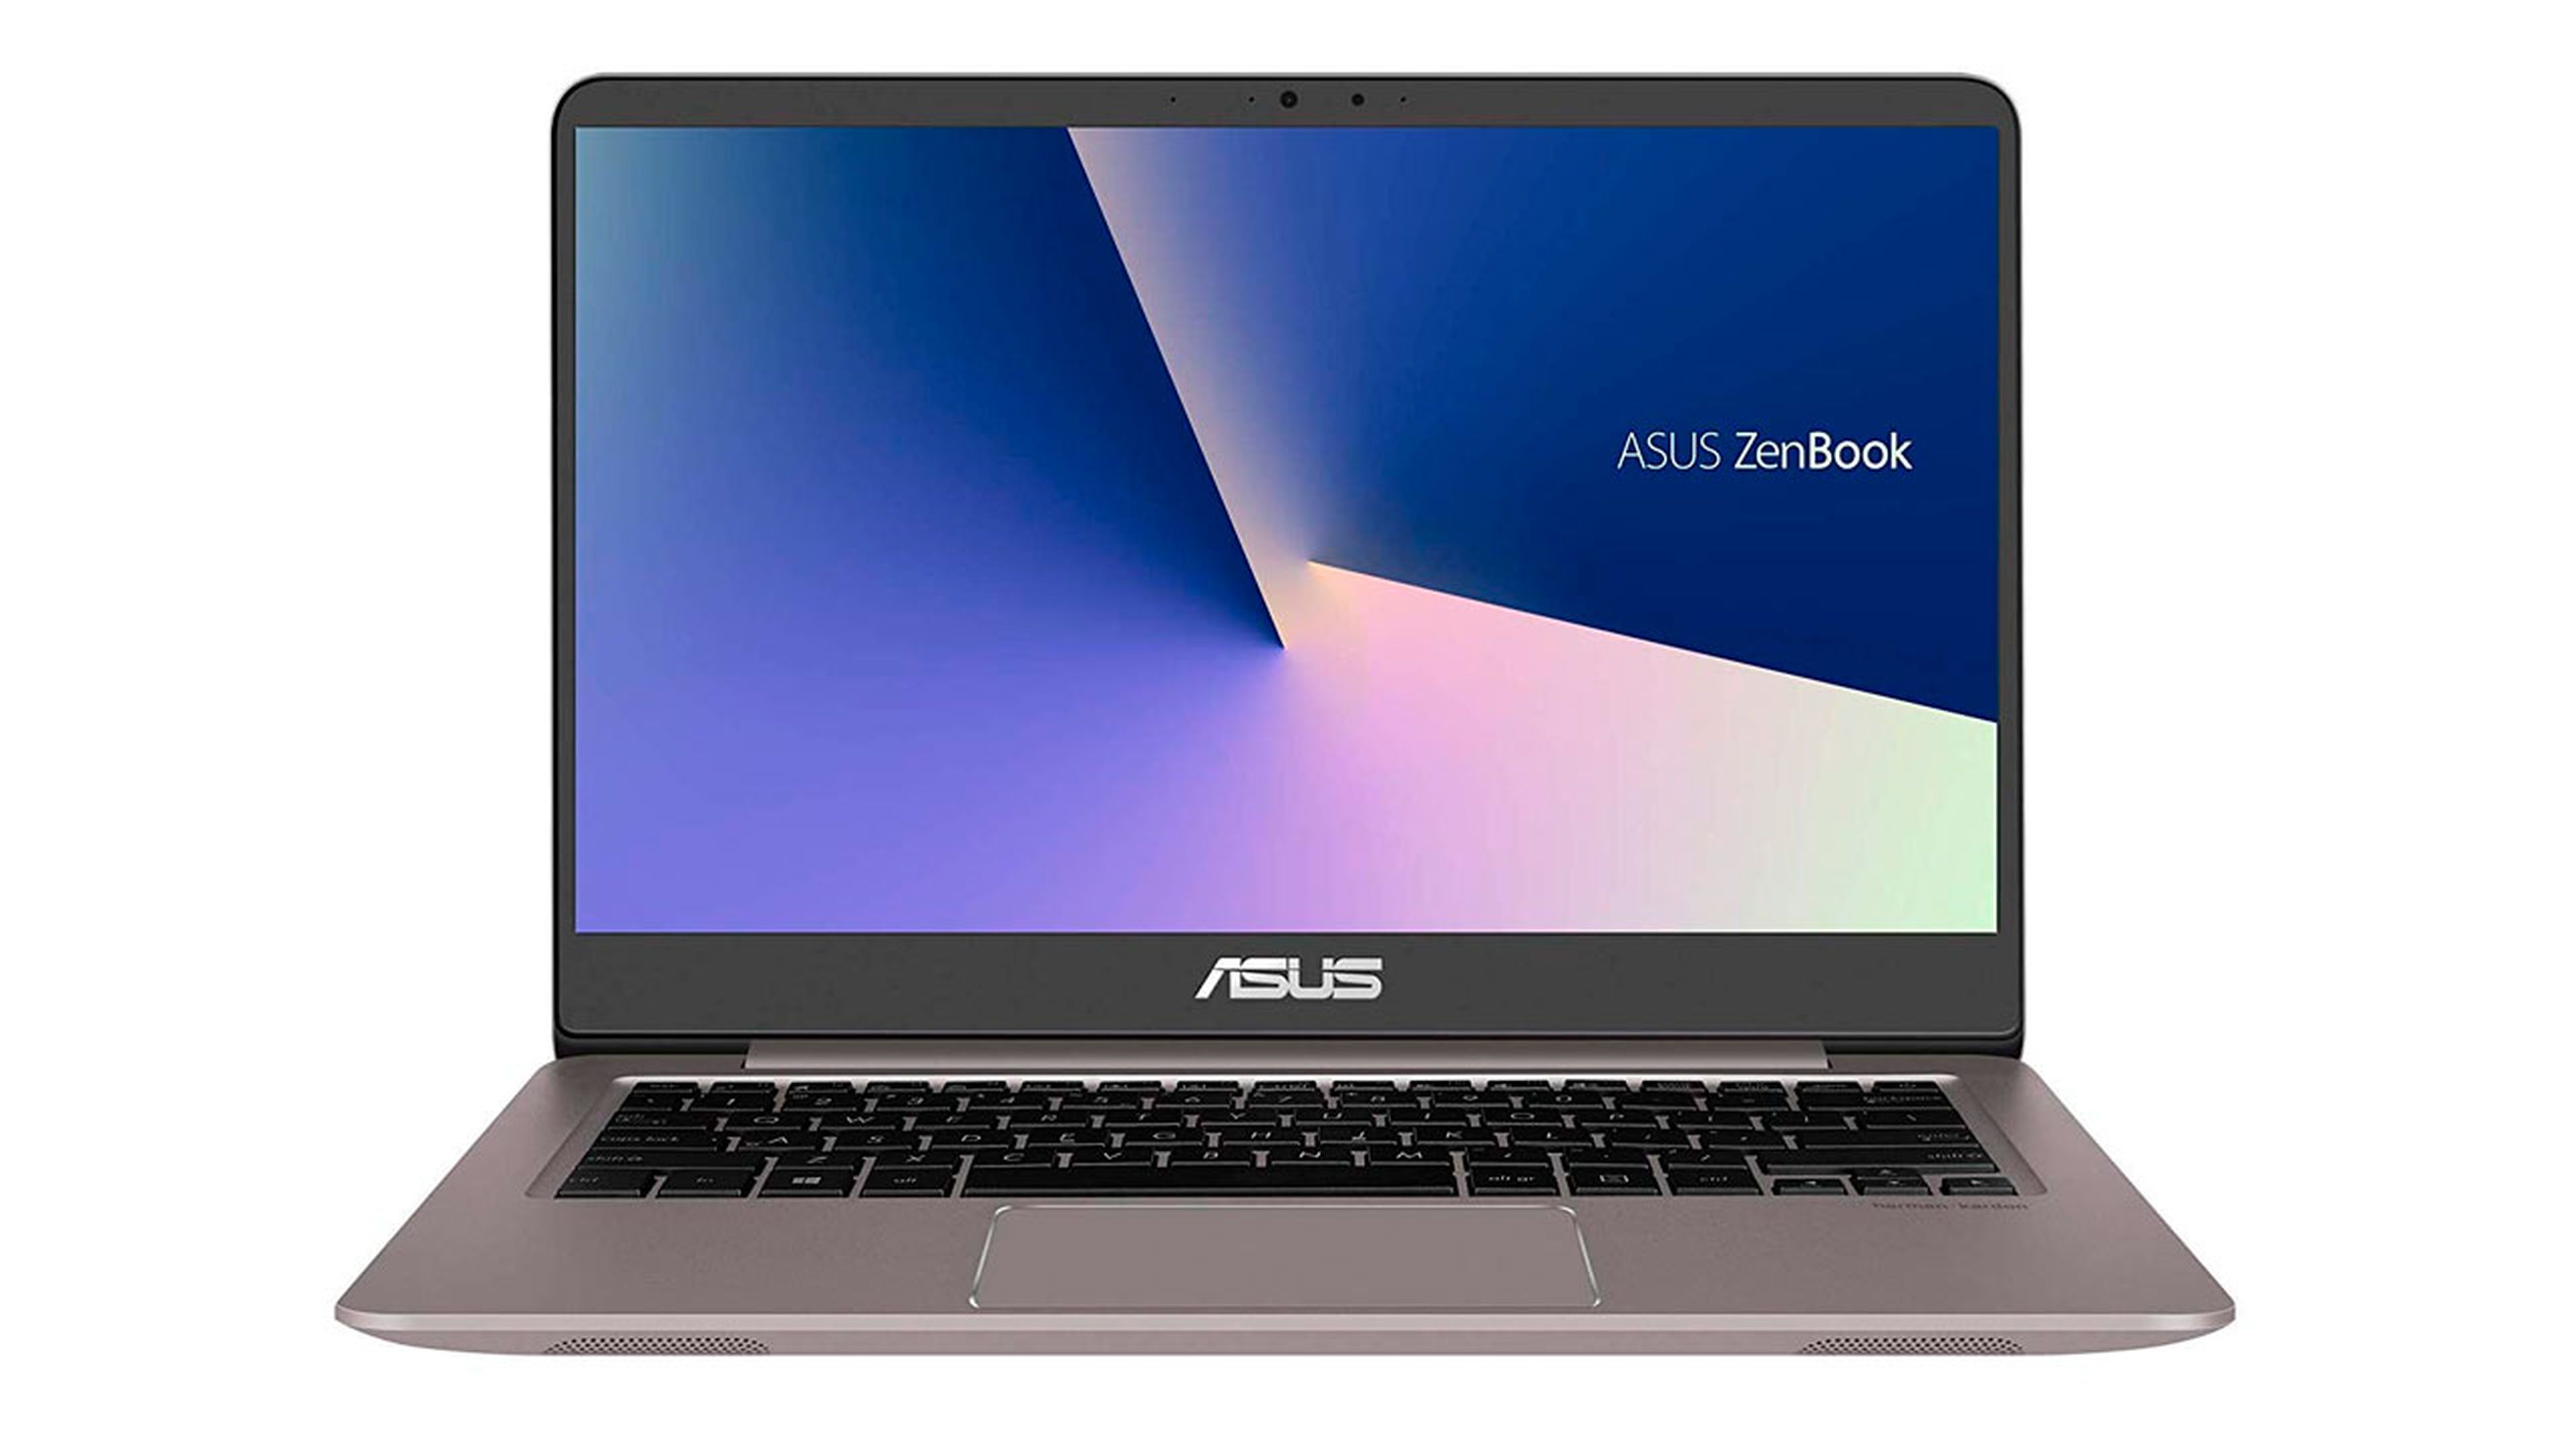 Oferta Amazon: Asus ZenBook UX410UA-GV028T por 550 euros (-31%)